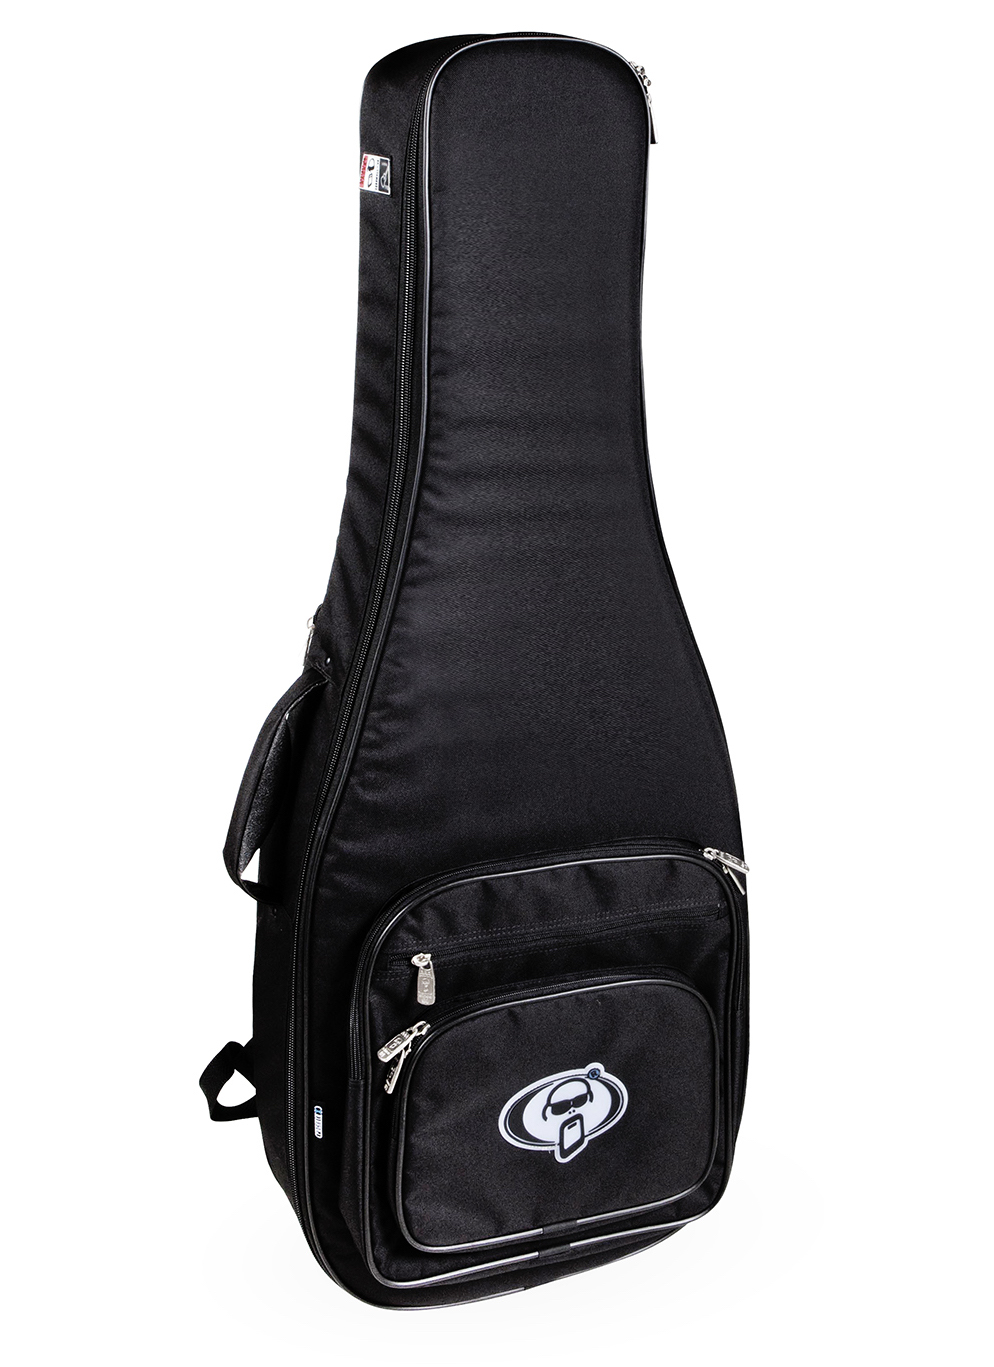 Køb ProtectionRacket Bass Guitar Case Deluxe - Pris 868.00 kr.